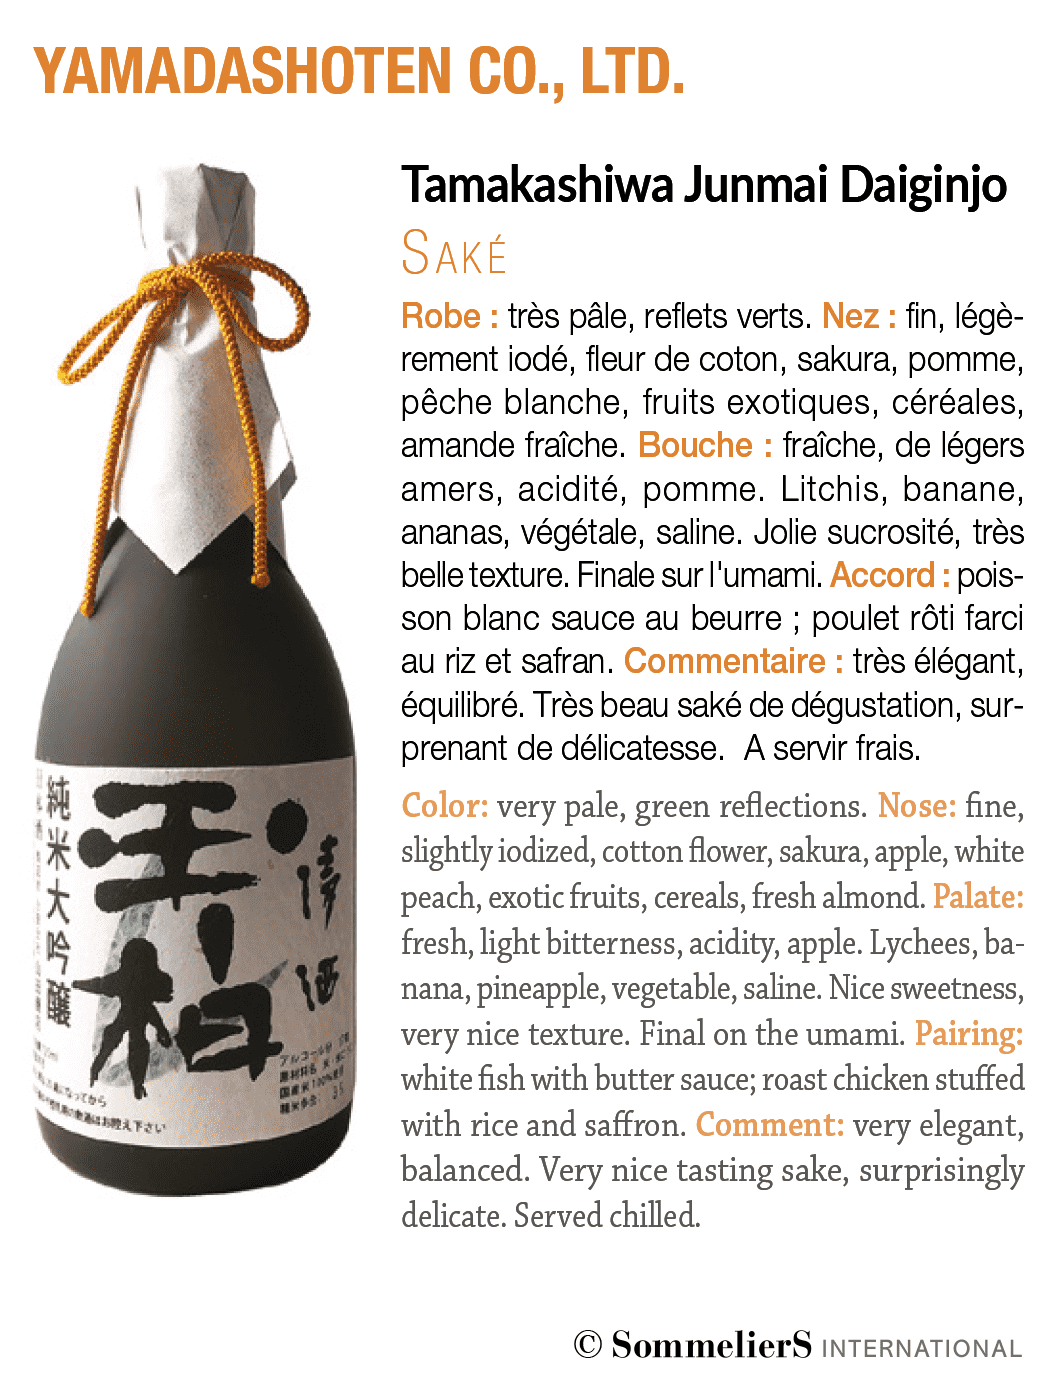 Sommeliers International Tamakashiwa Junmai Daiginjo